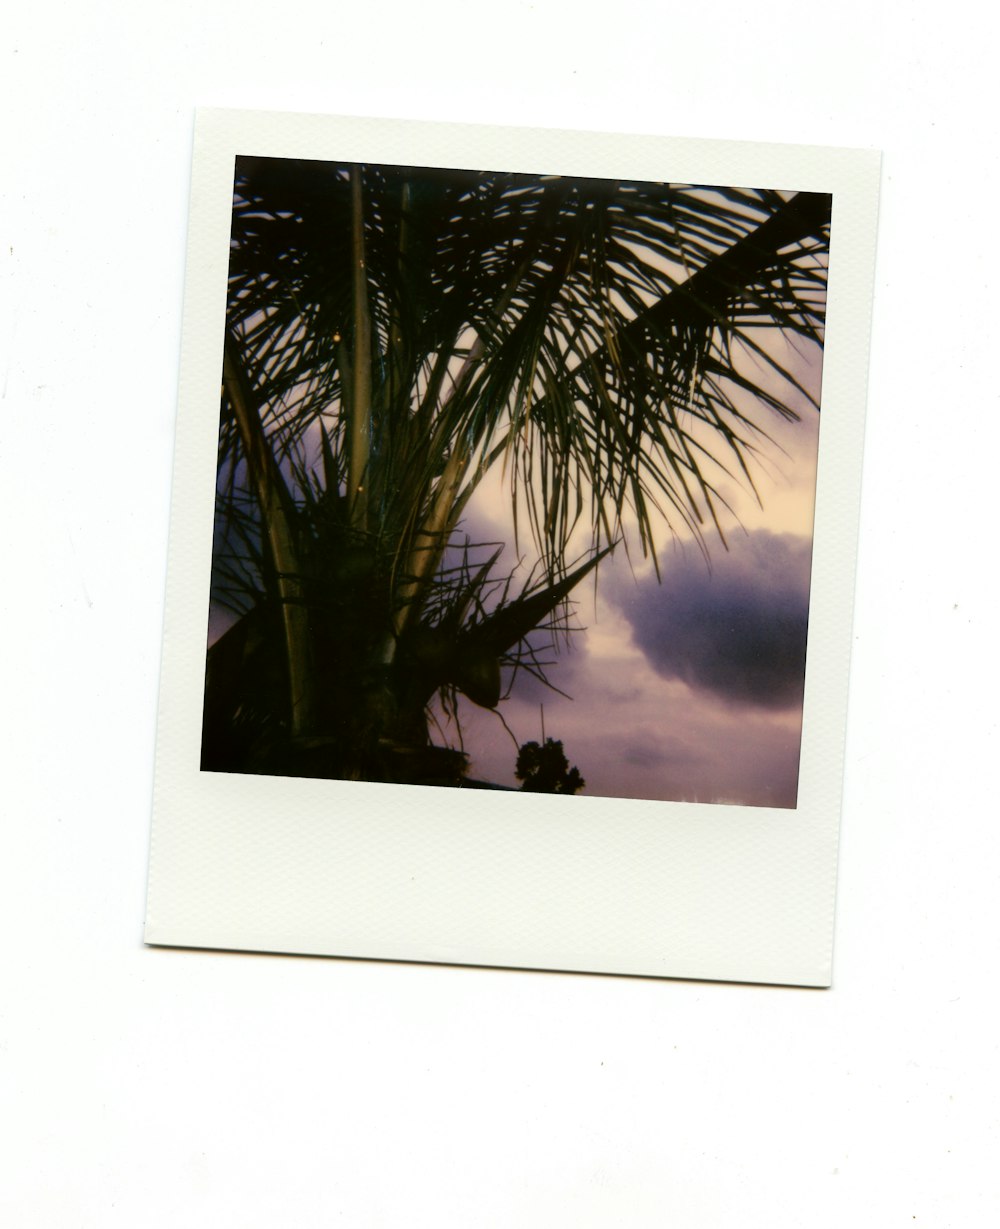 Grüne Palme unter blauem Himmel